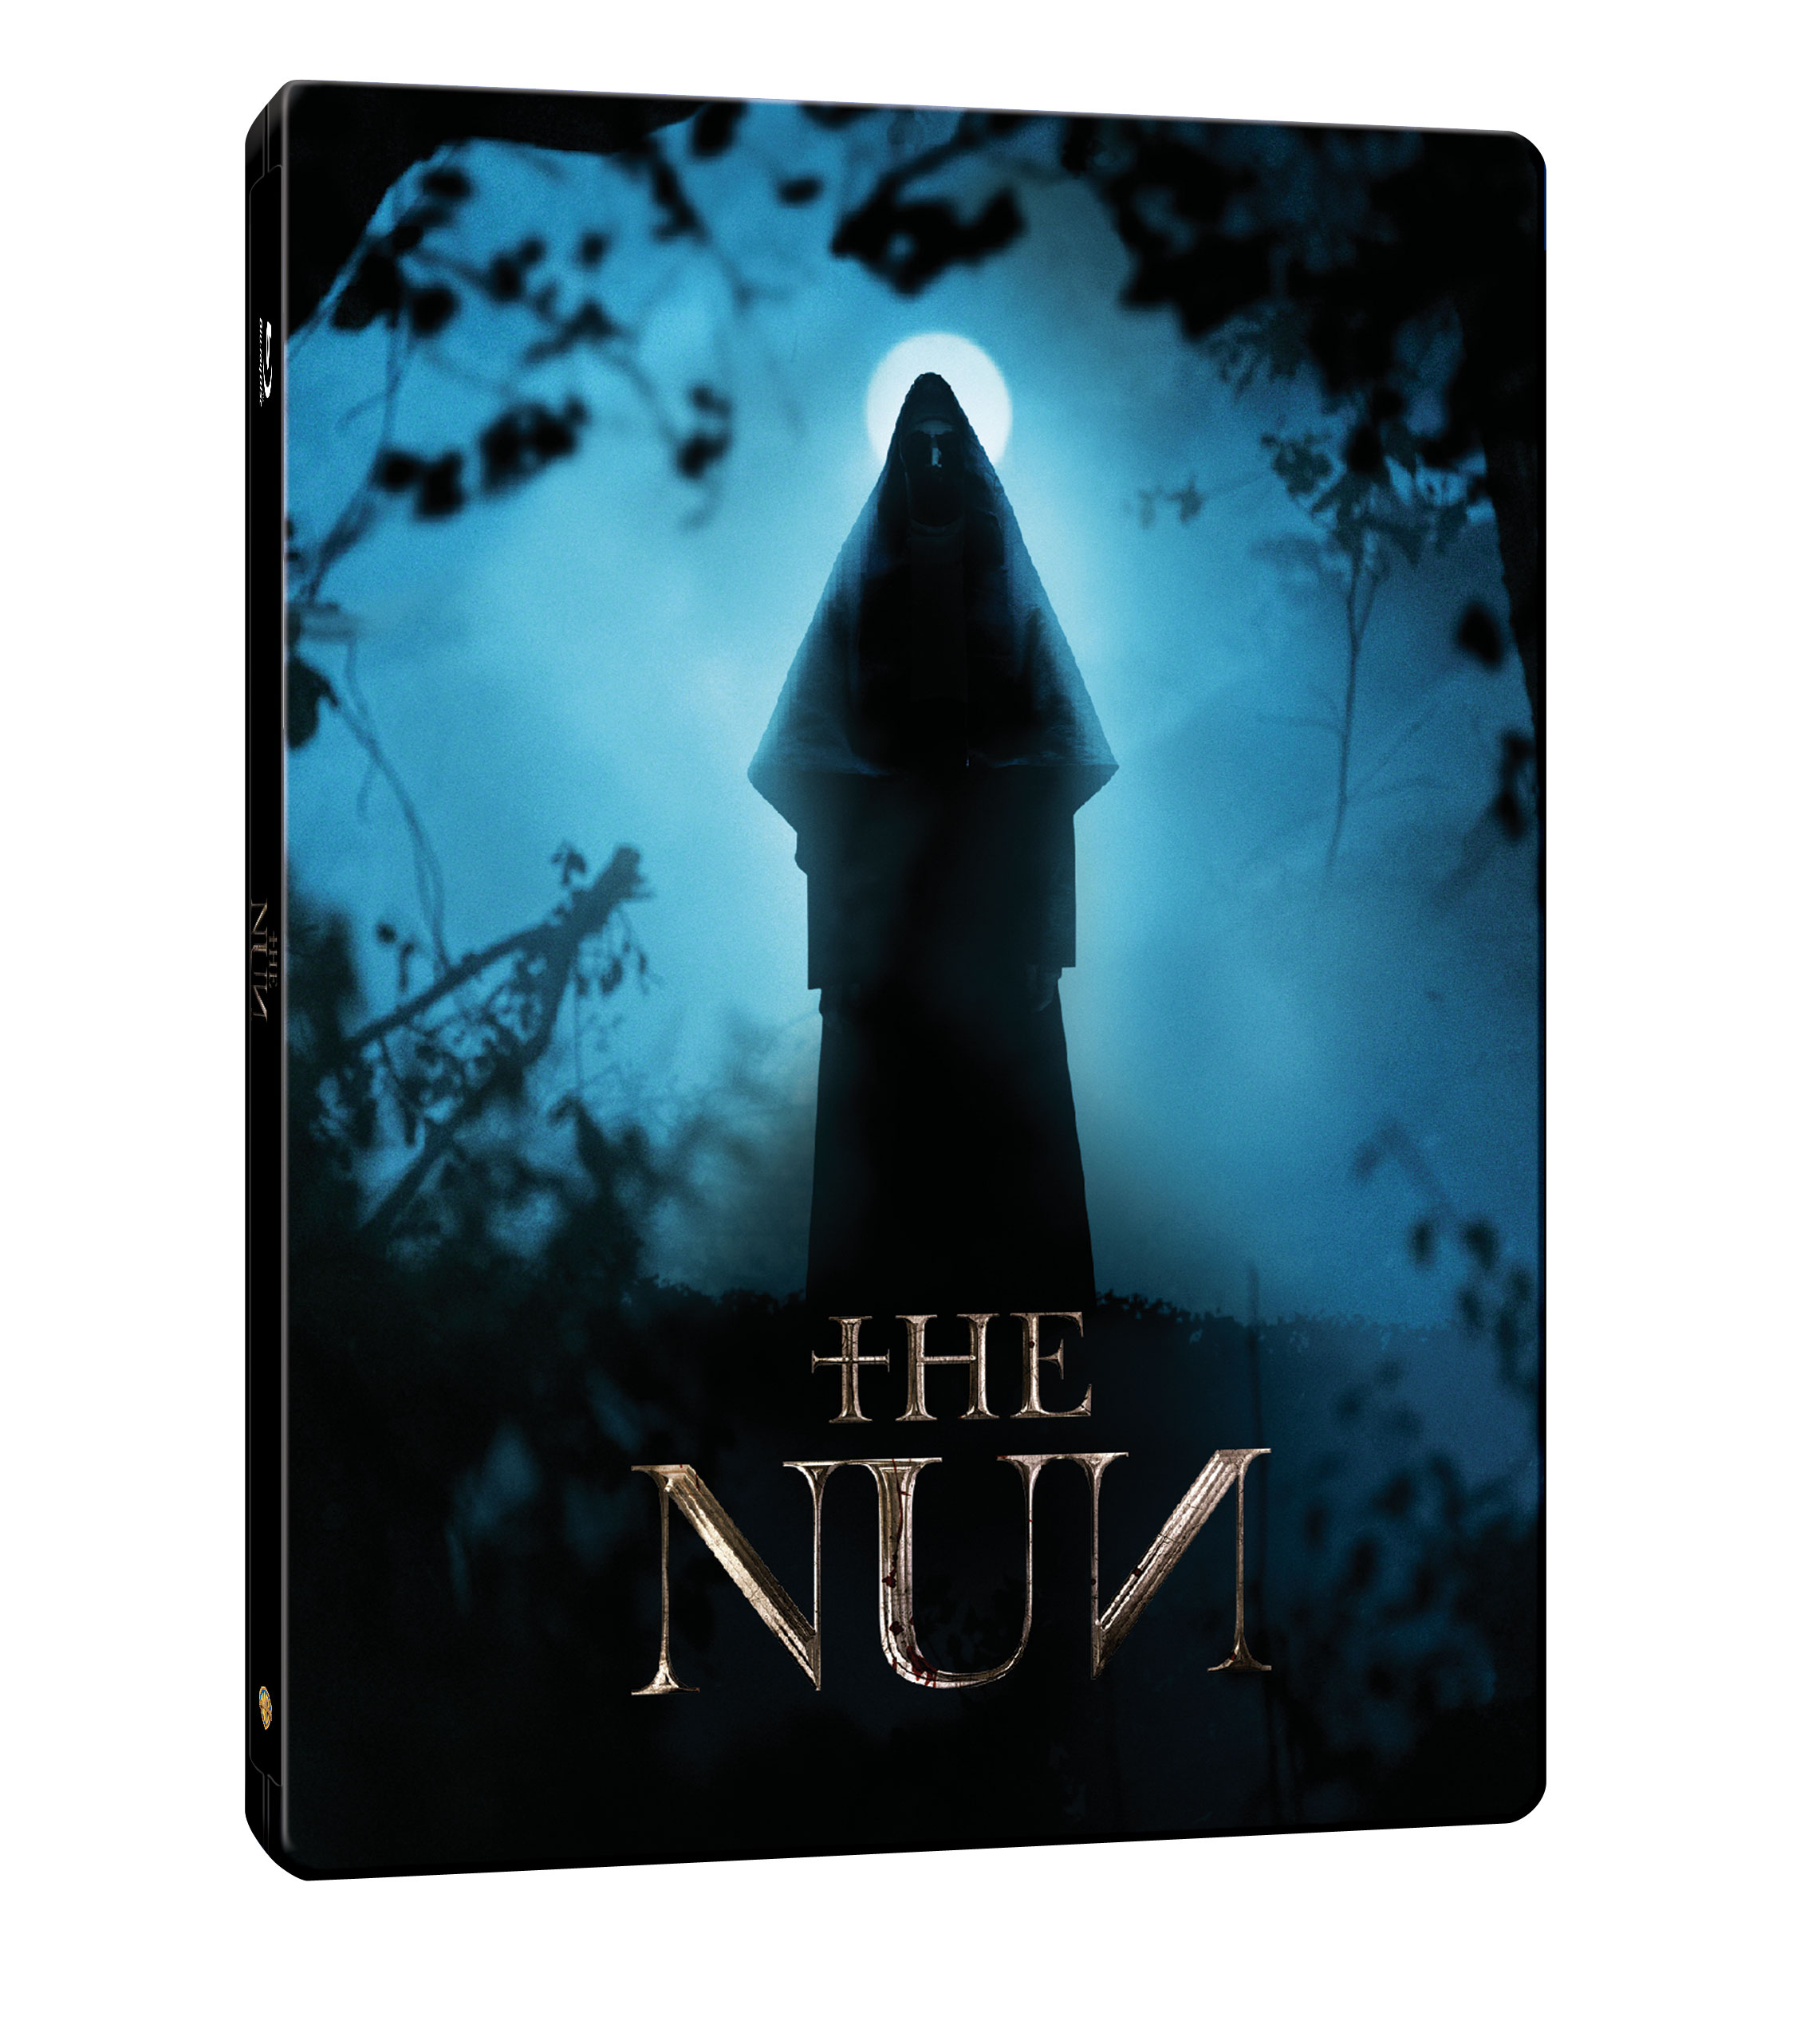 [Blu-ray] The Nun Steelbook Limited Edition